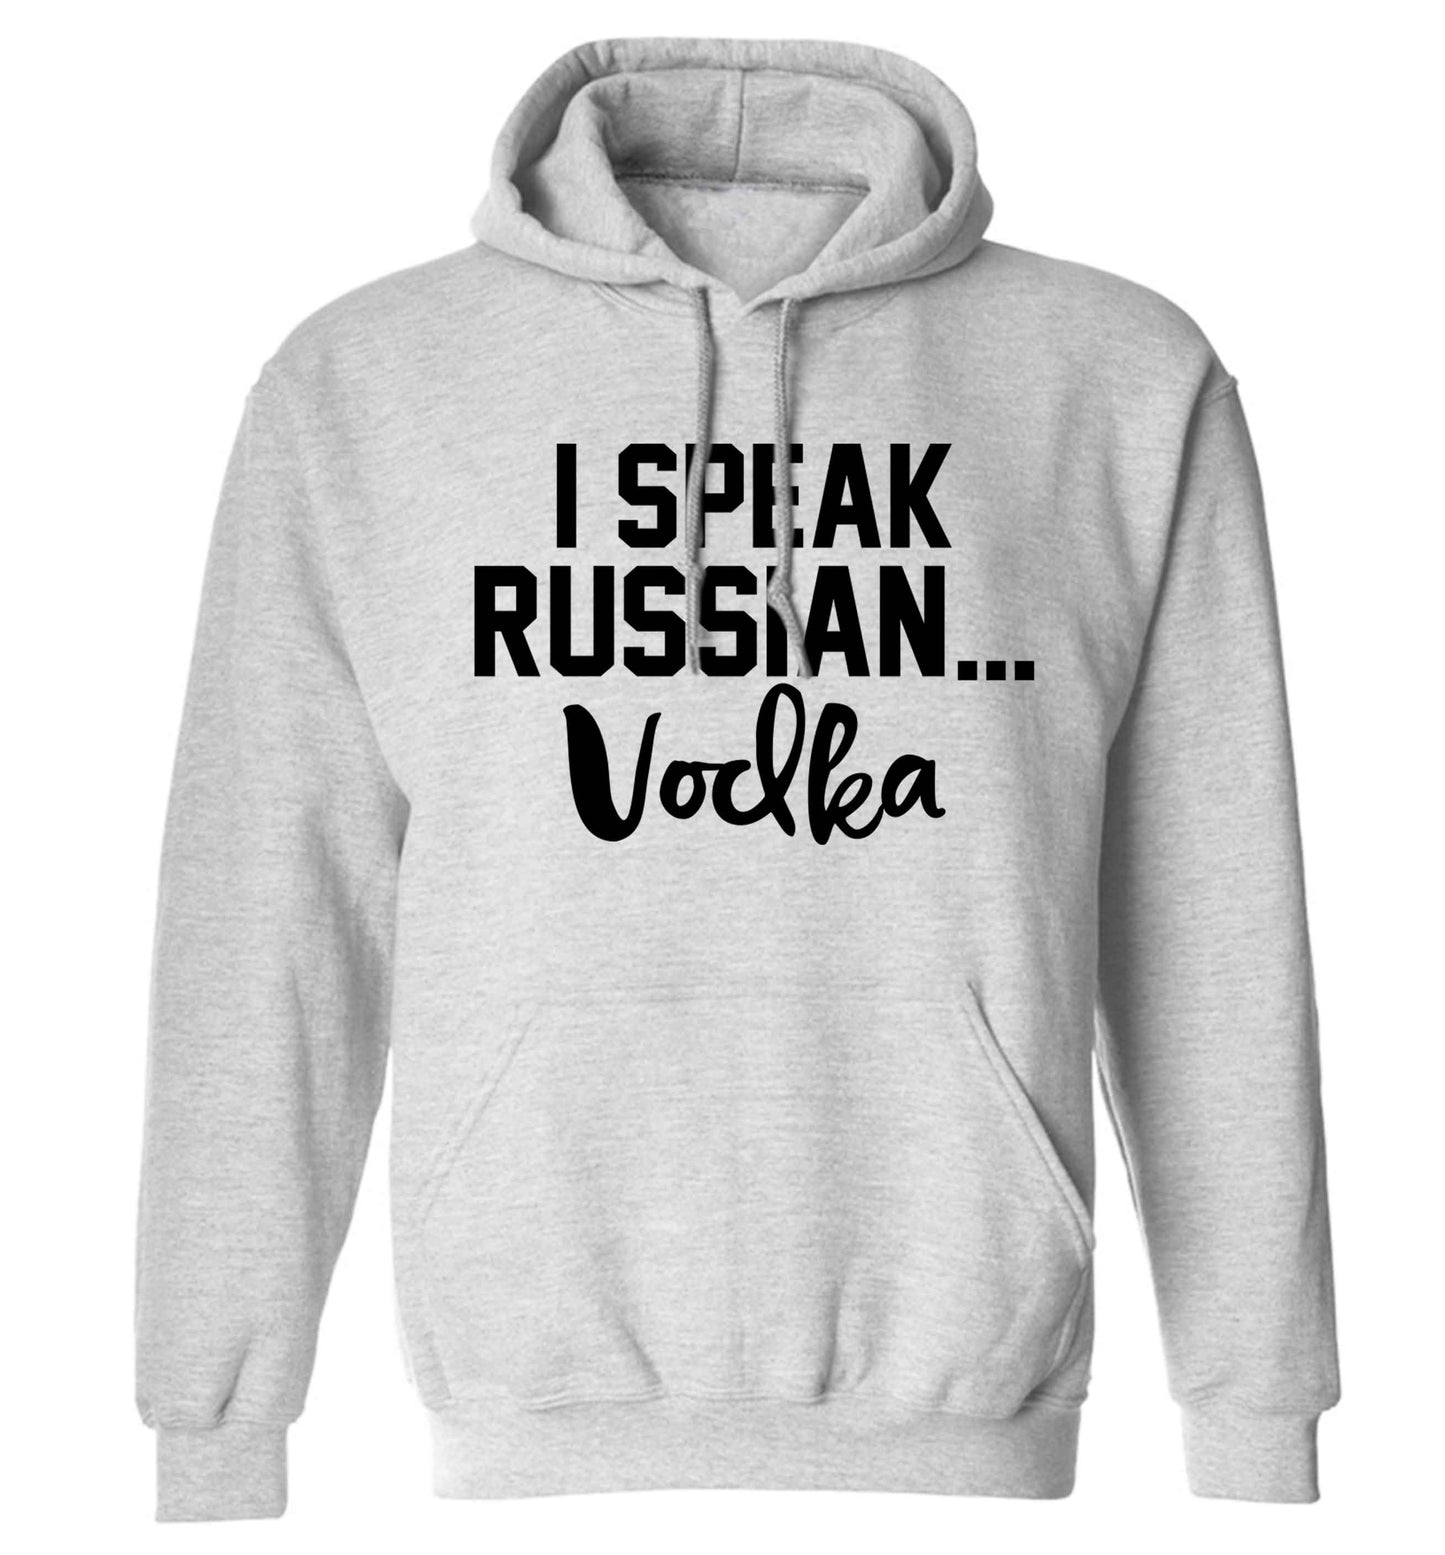 I speak russian...vodka adults unisex grey hoodie 2XL